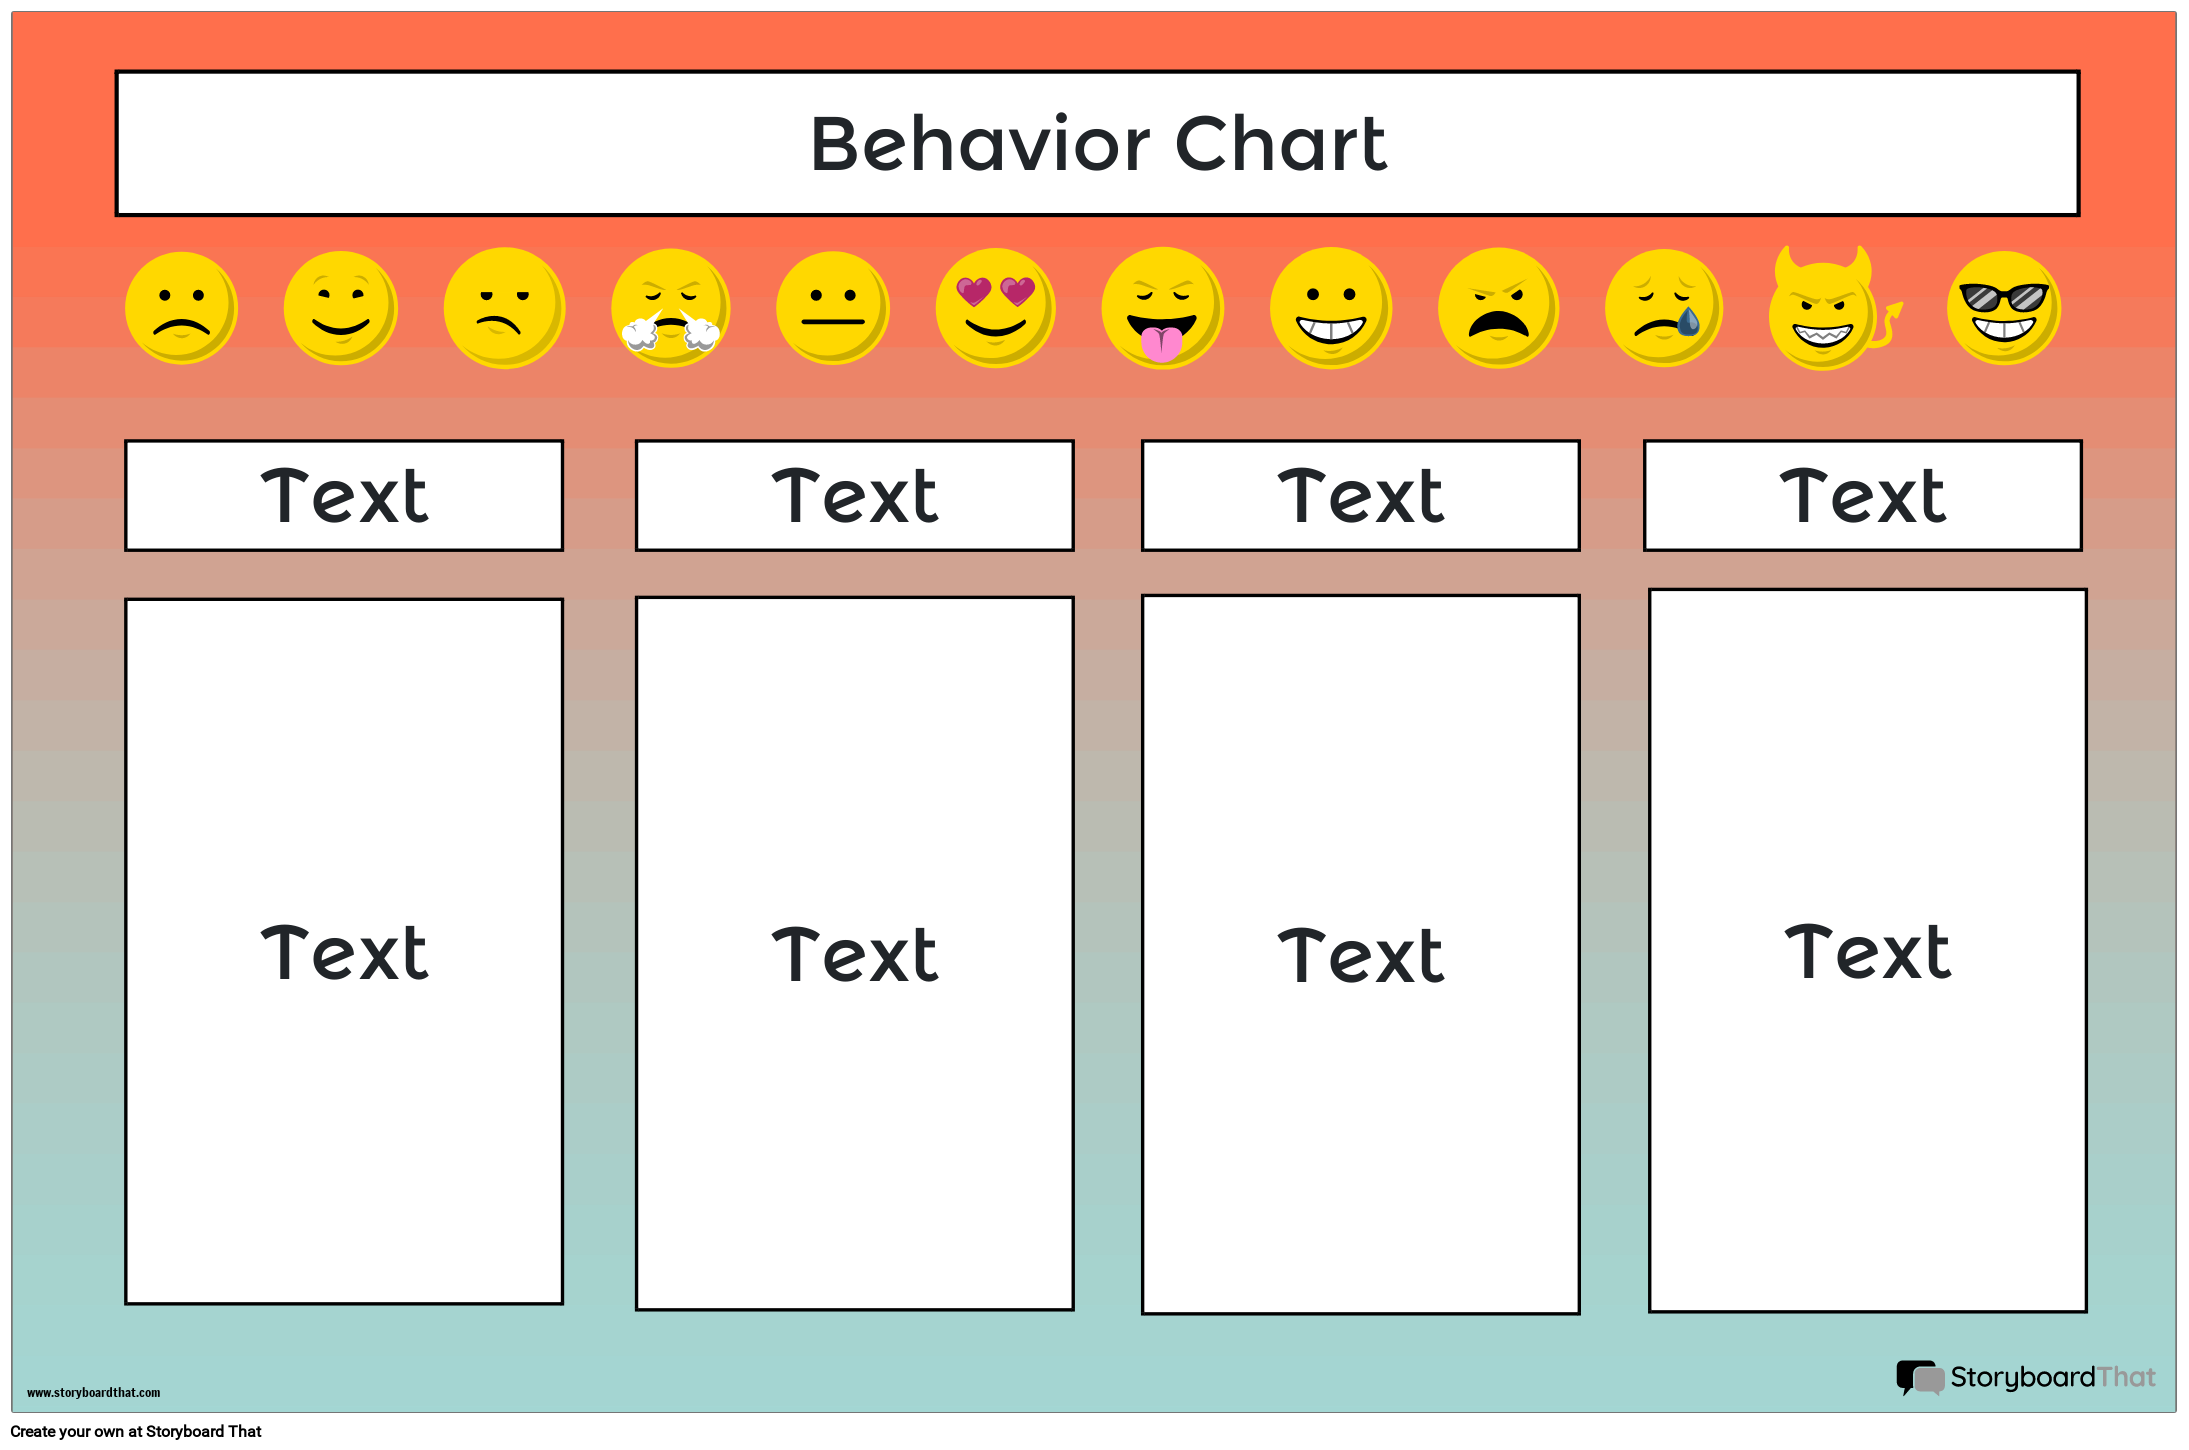 Behavior Chart with Emojis